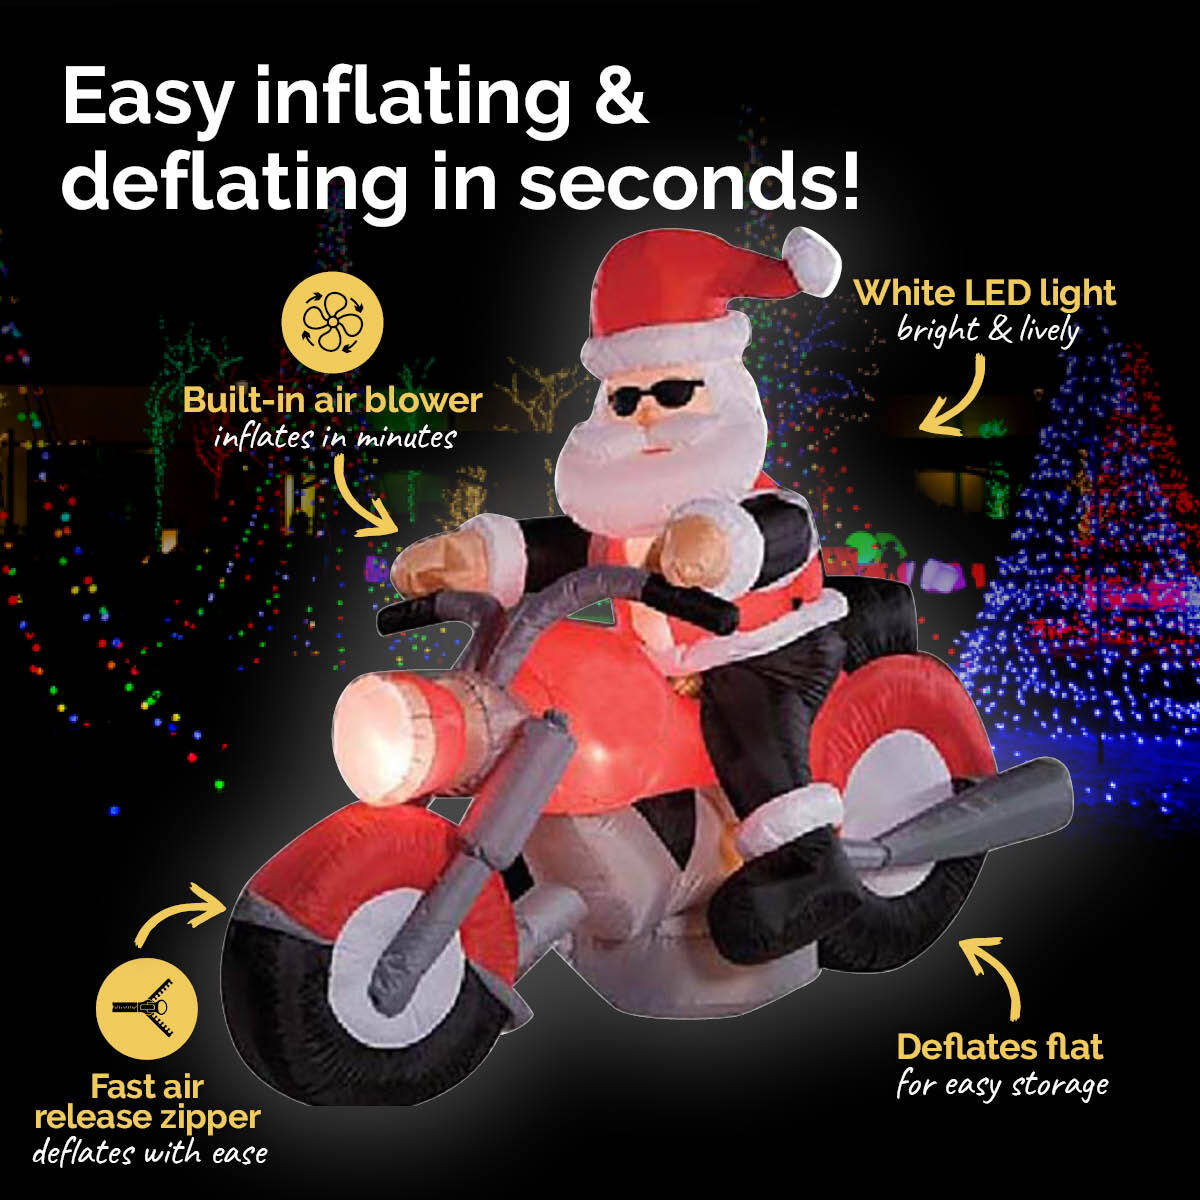 1.6m Santa & Motorbike Built-In Blower Bright LED Lighting